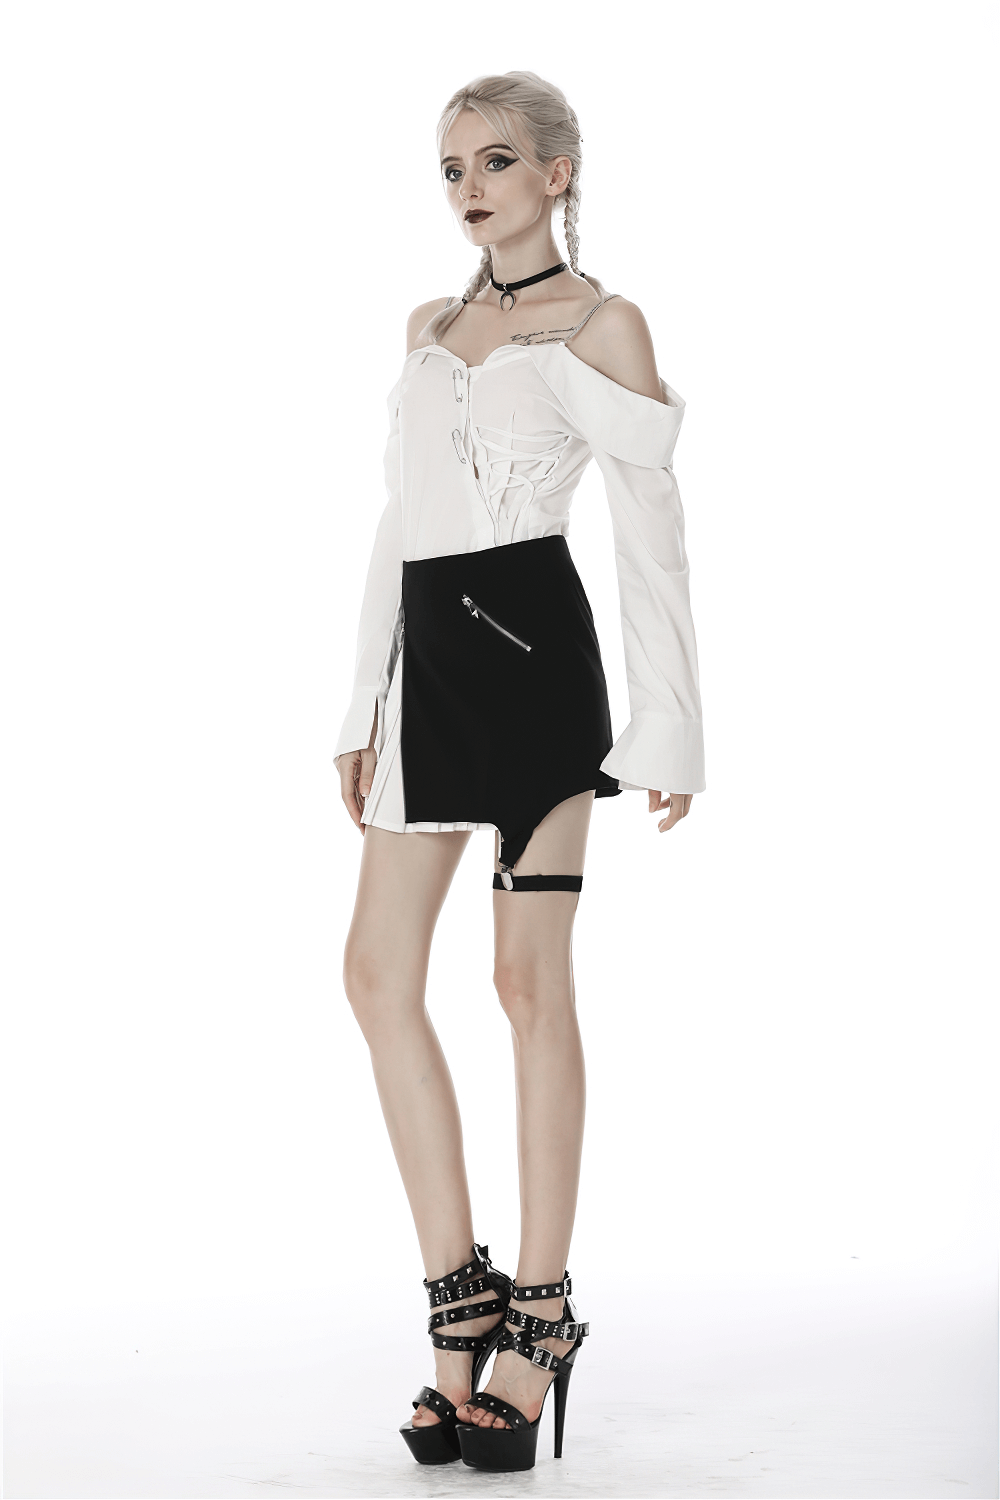 Black and White Punk Mini Skirt with Leg Loop Zipper